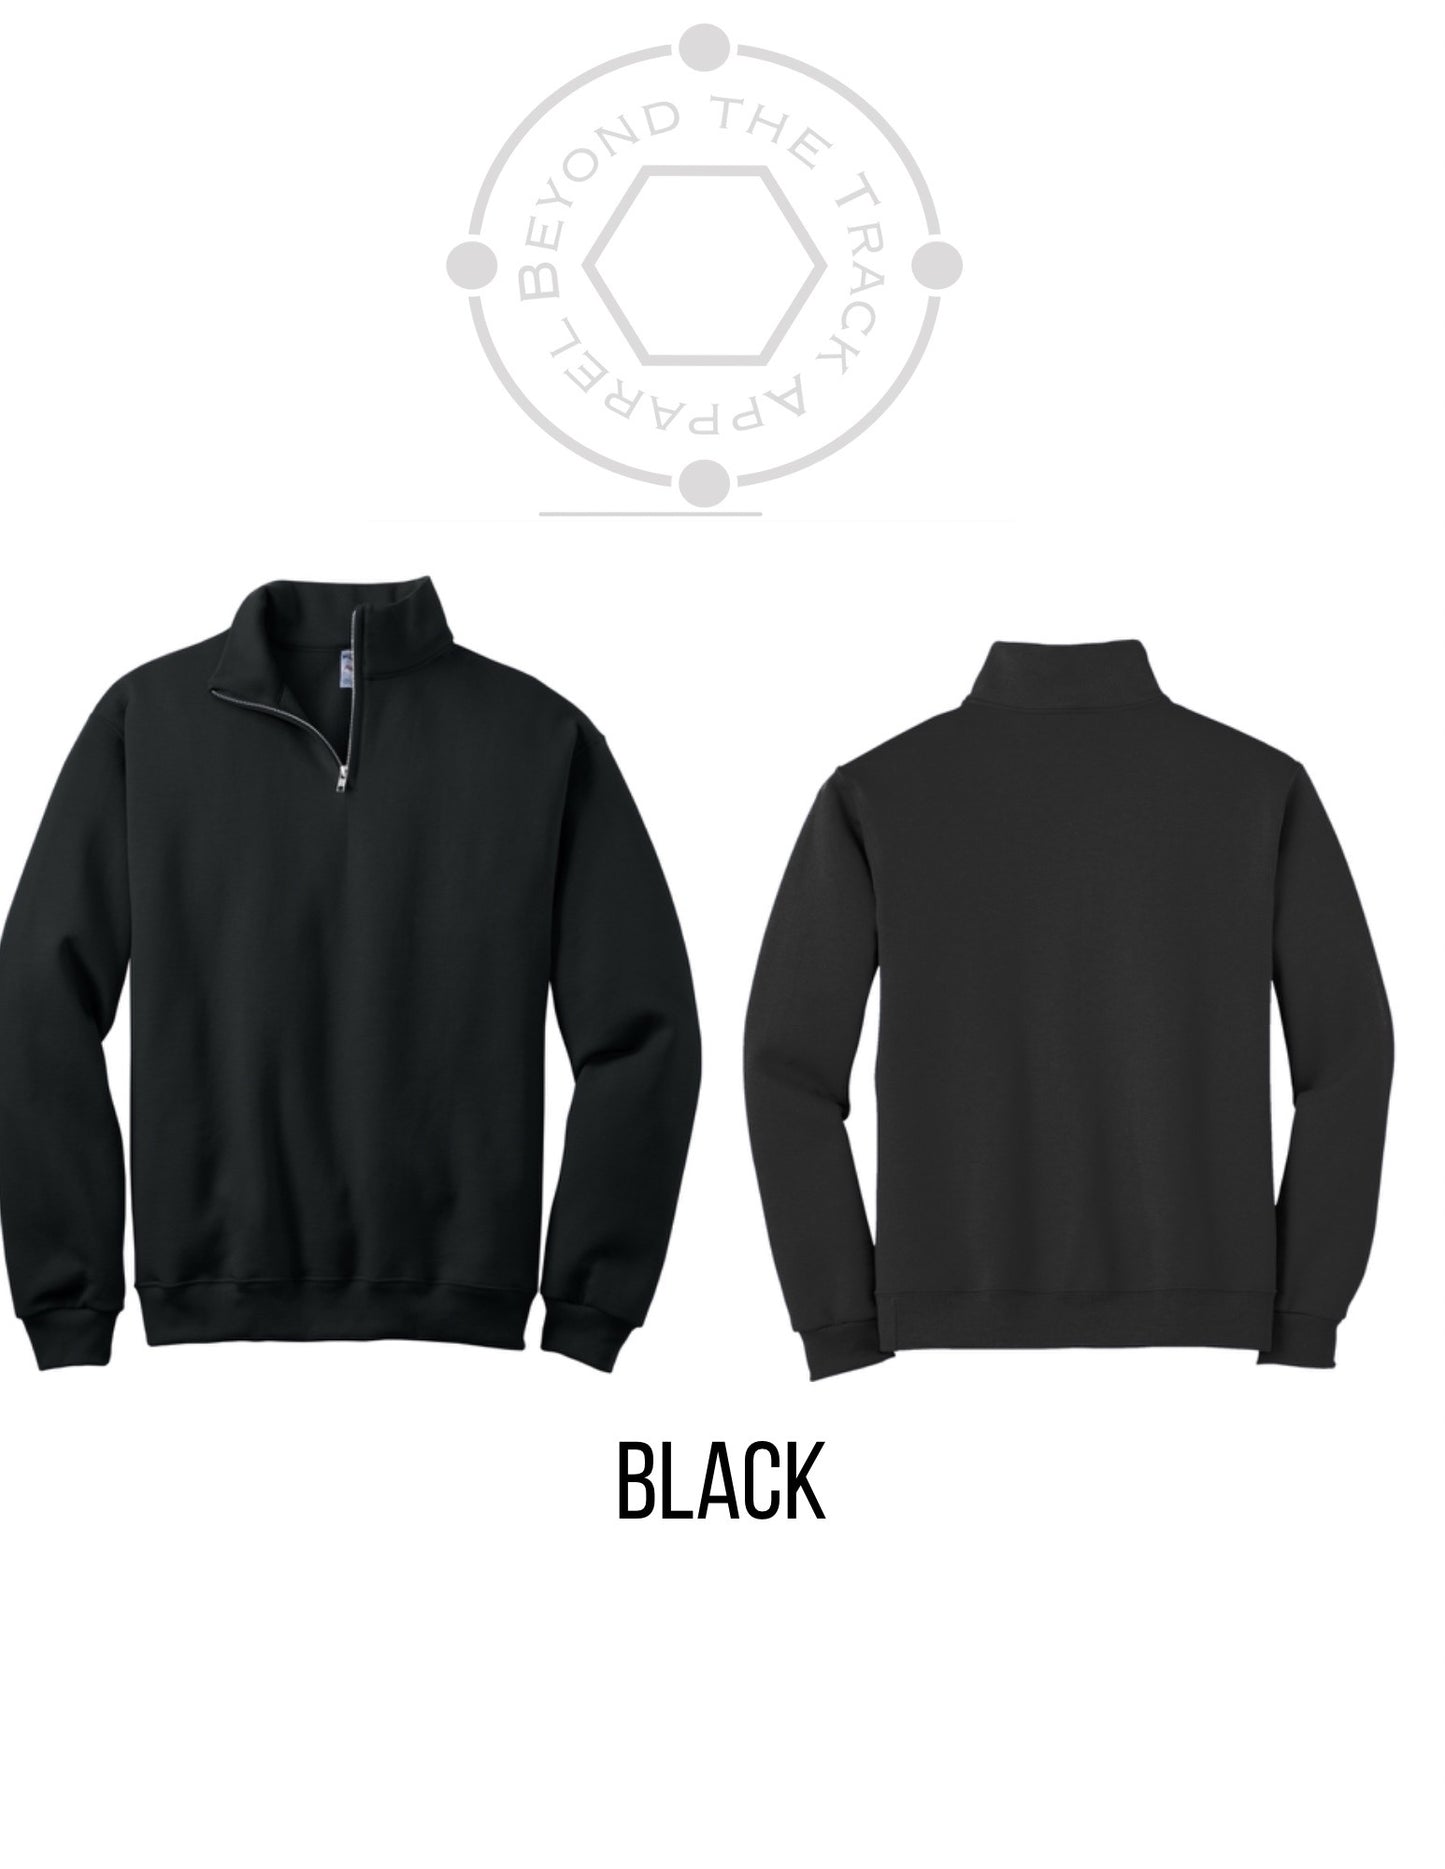 Unisex 1/4 Zip Sweater - Customizable